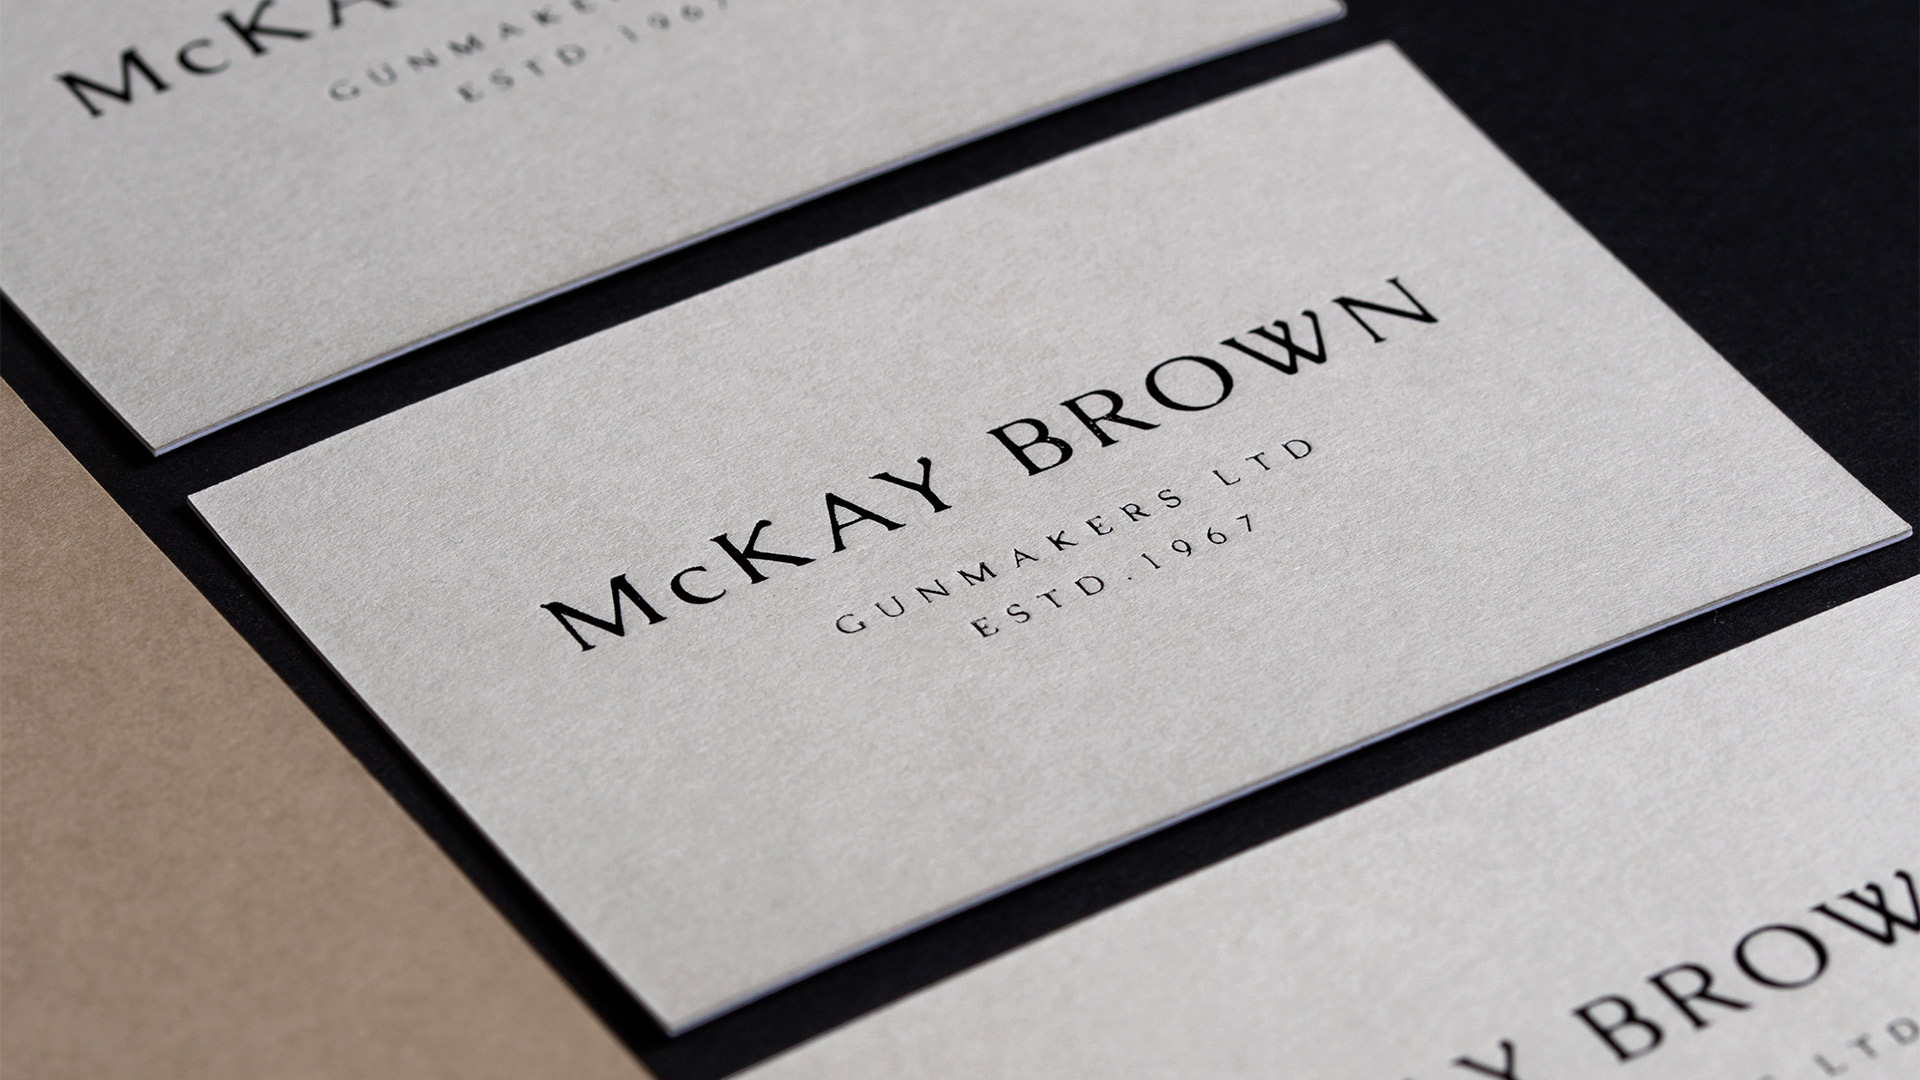 McKay Brown